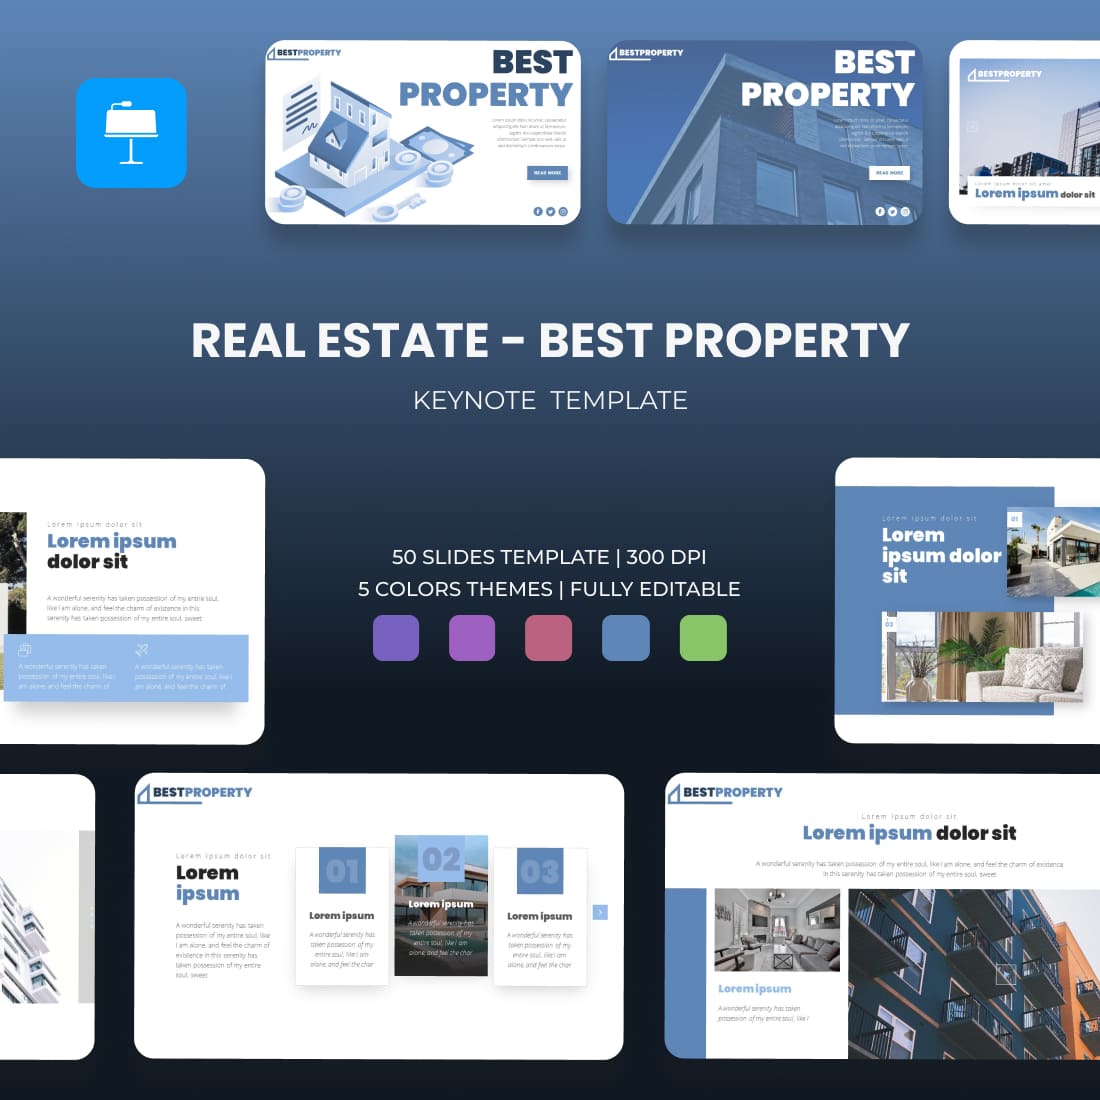 Best Property Real Estate Keynote Template.